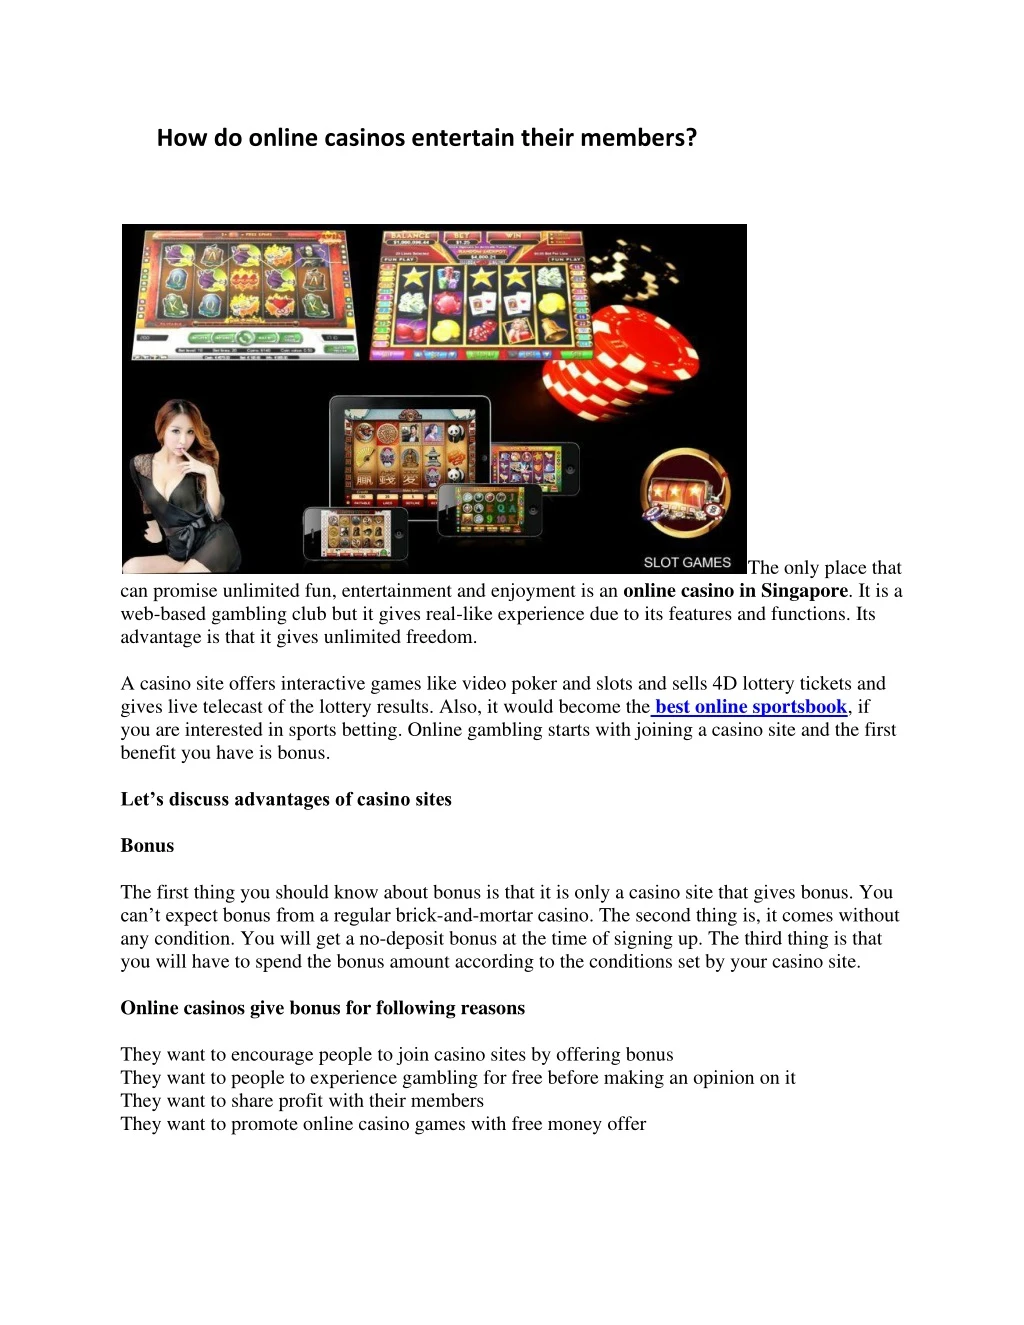 how do online casinos entertain their members